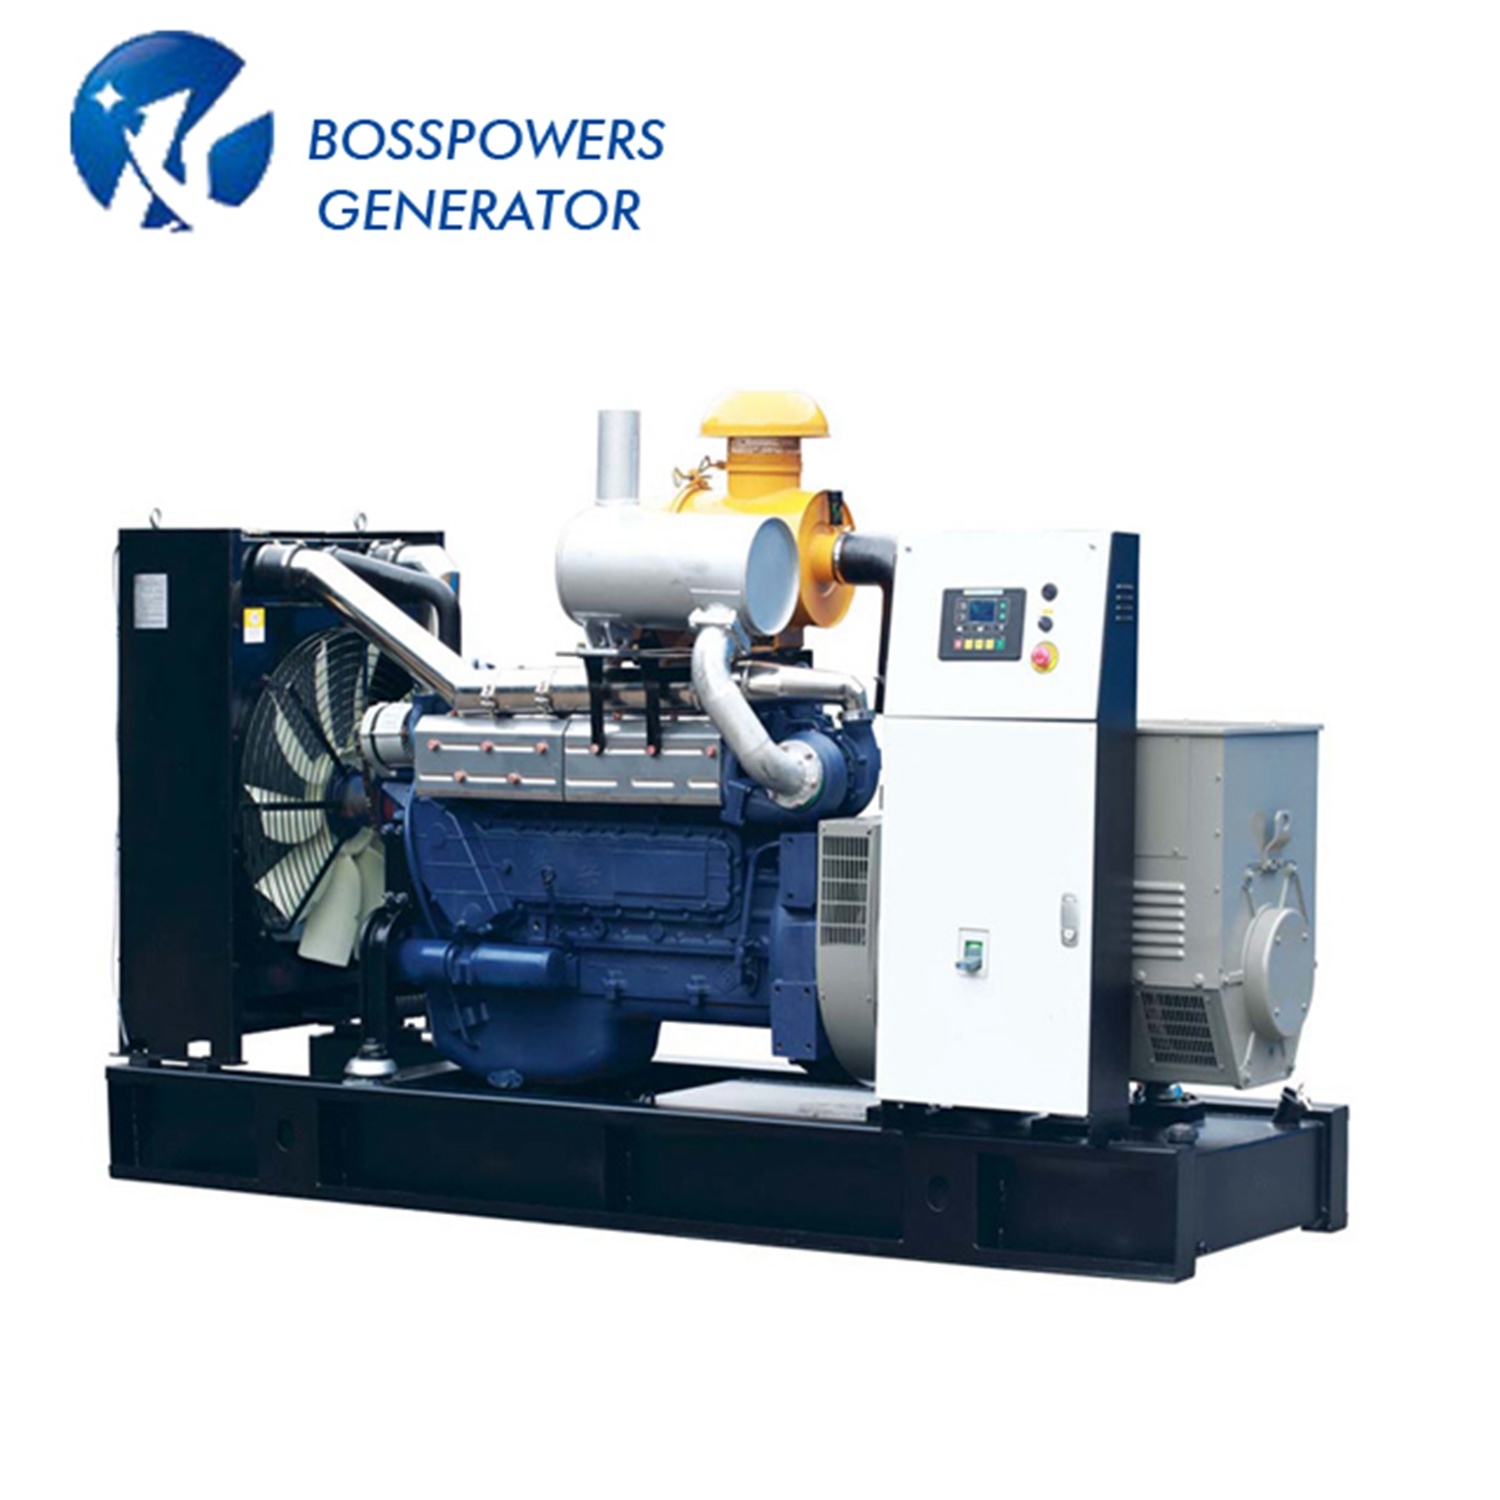 1000kVA Generator 800kw Container Diesel Generators for Sale Price